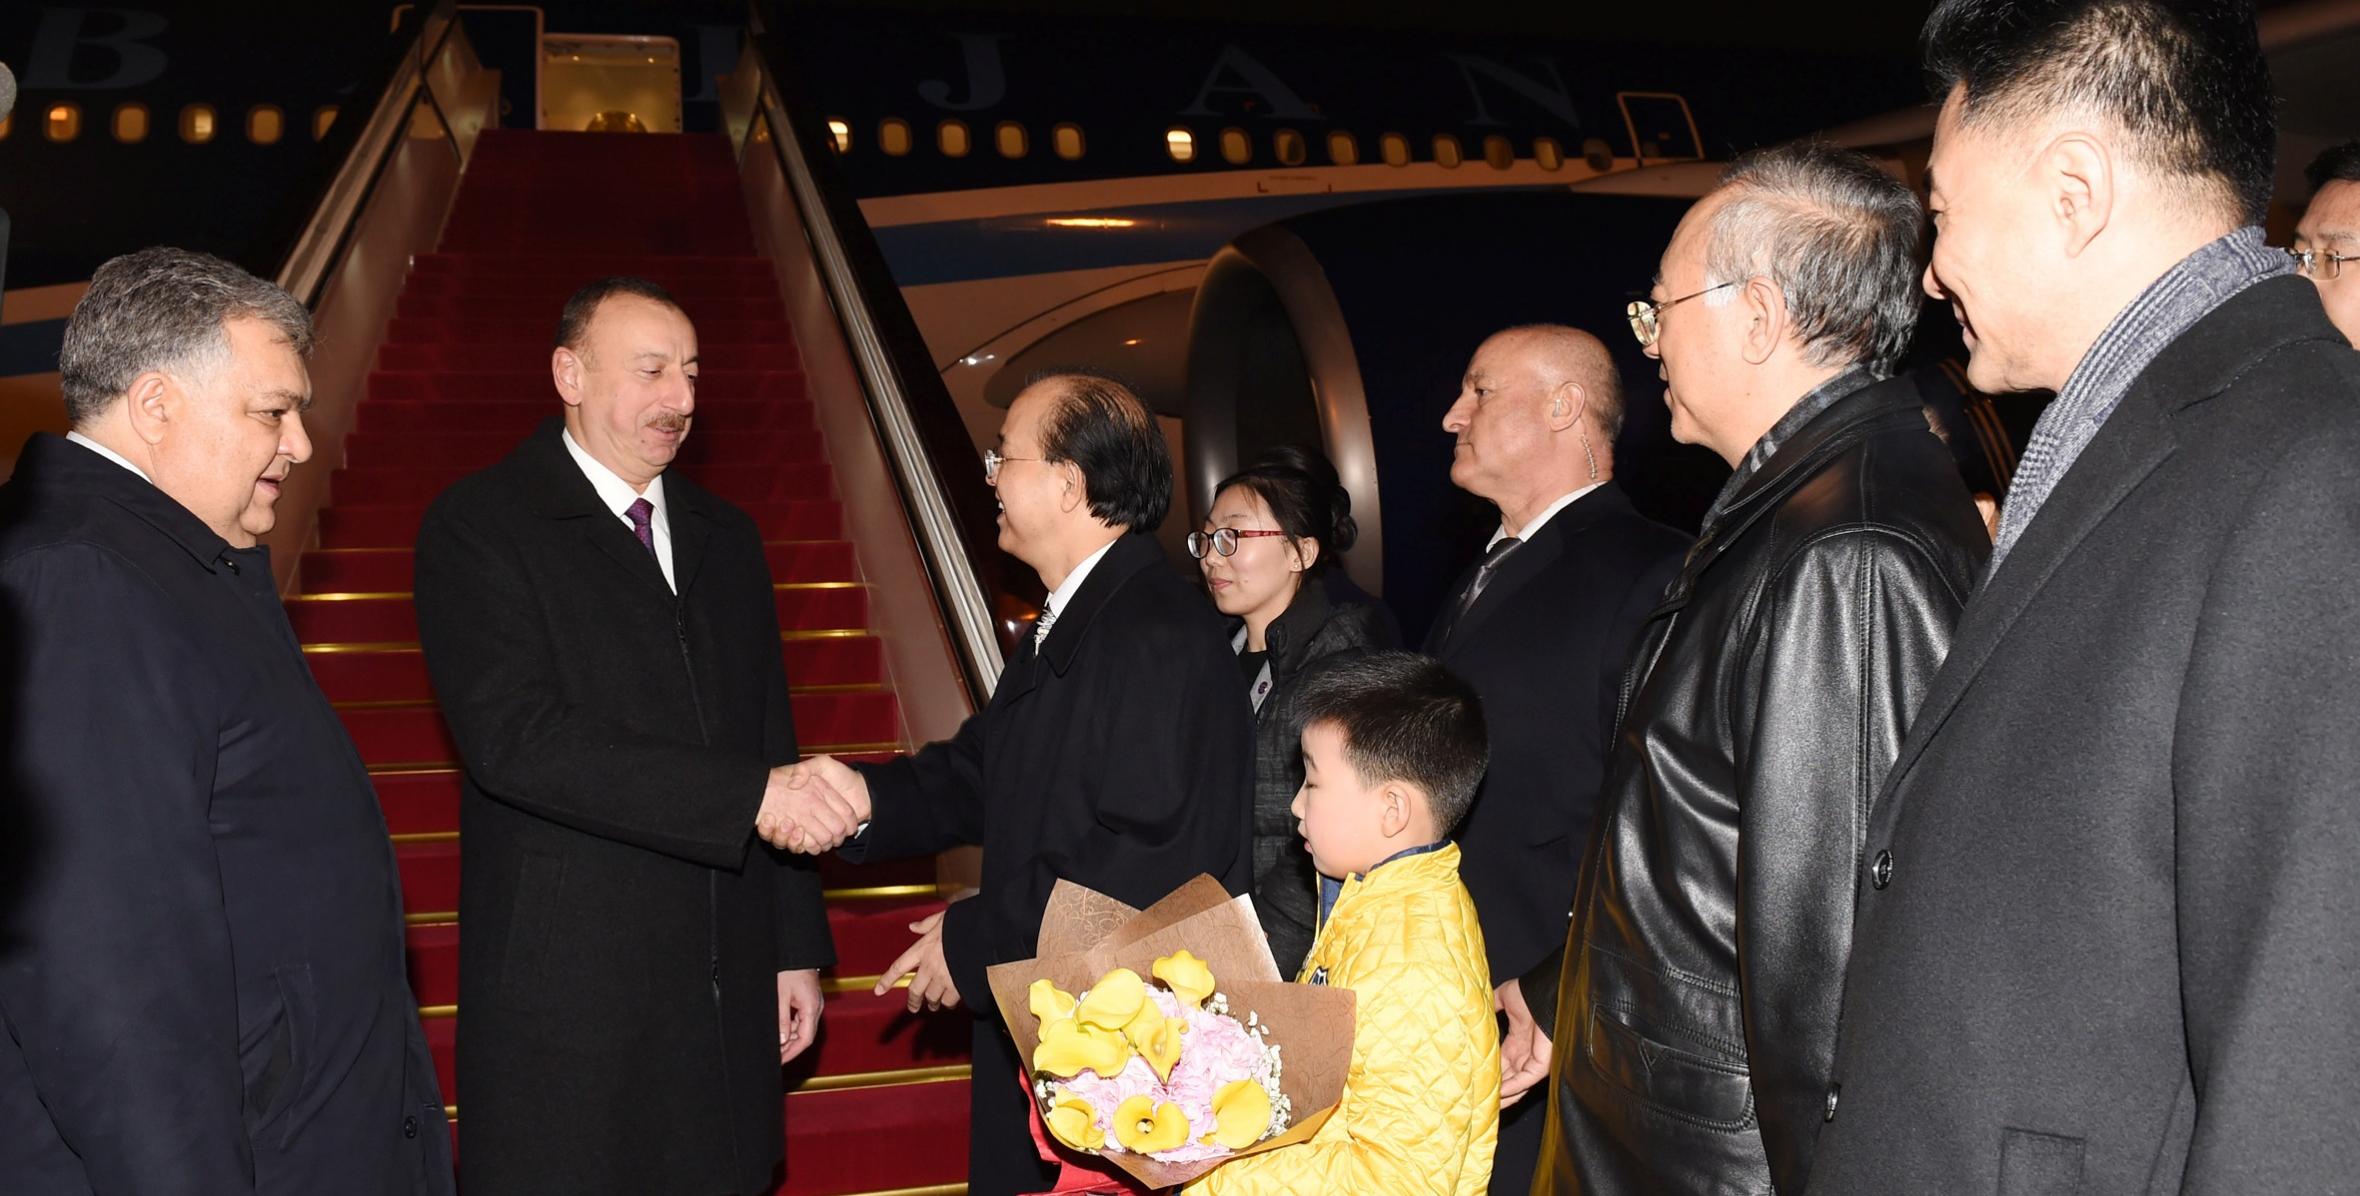 Ilham Aliyev arrived in Beijing from Xian